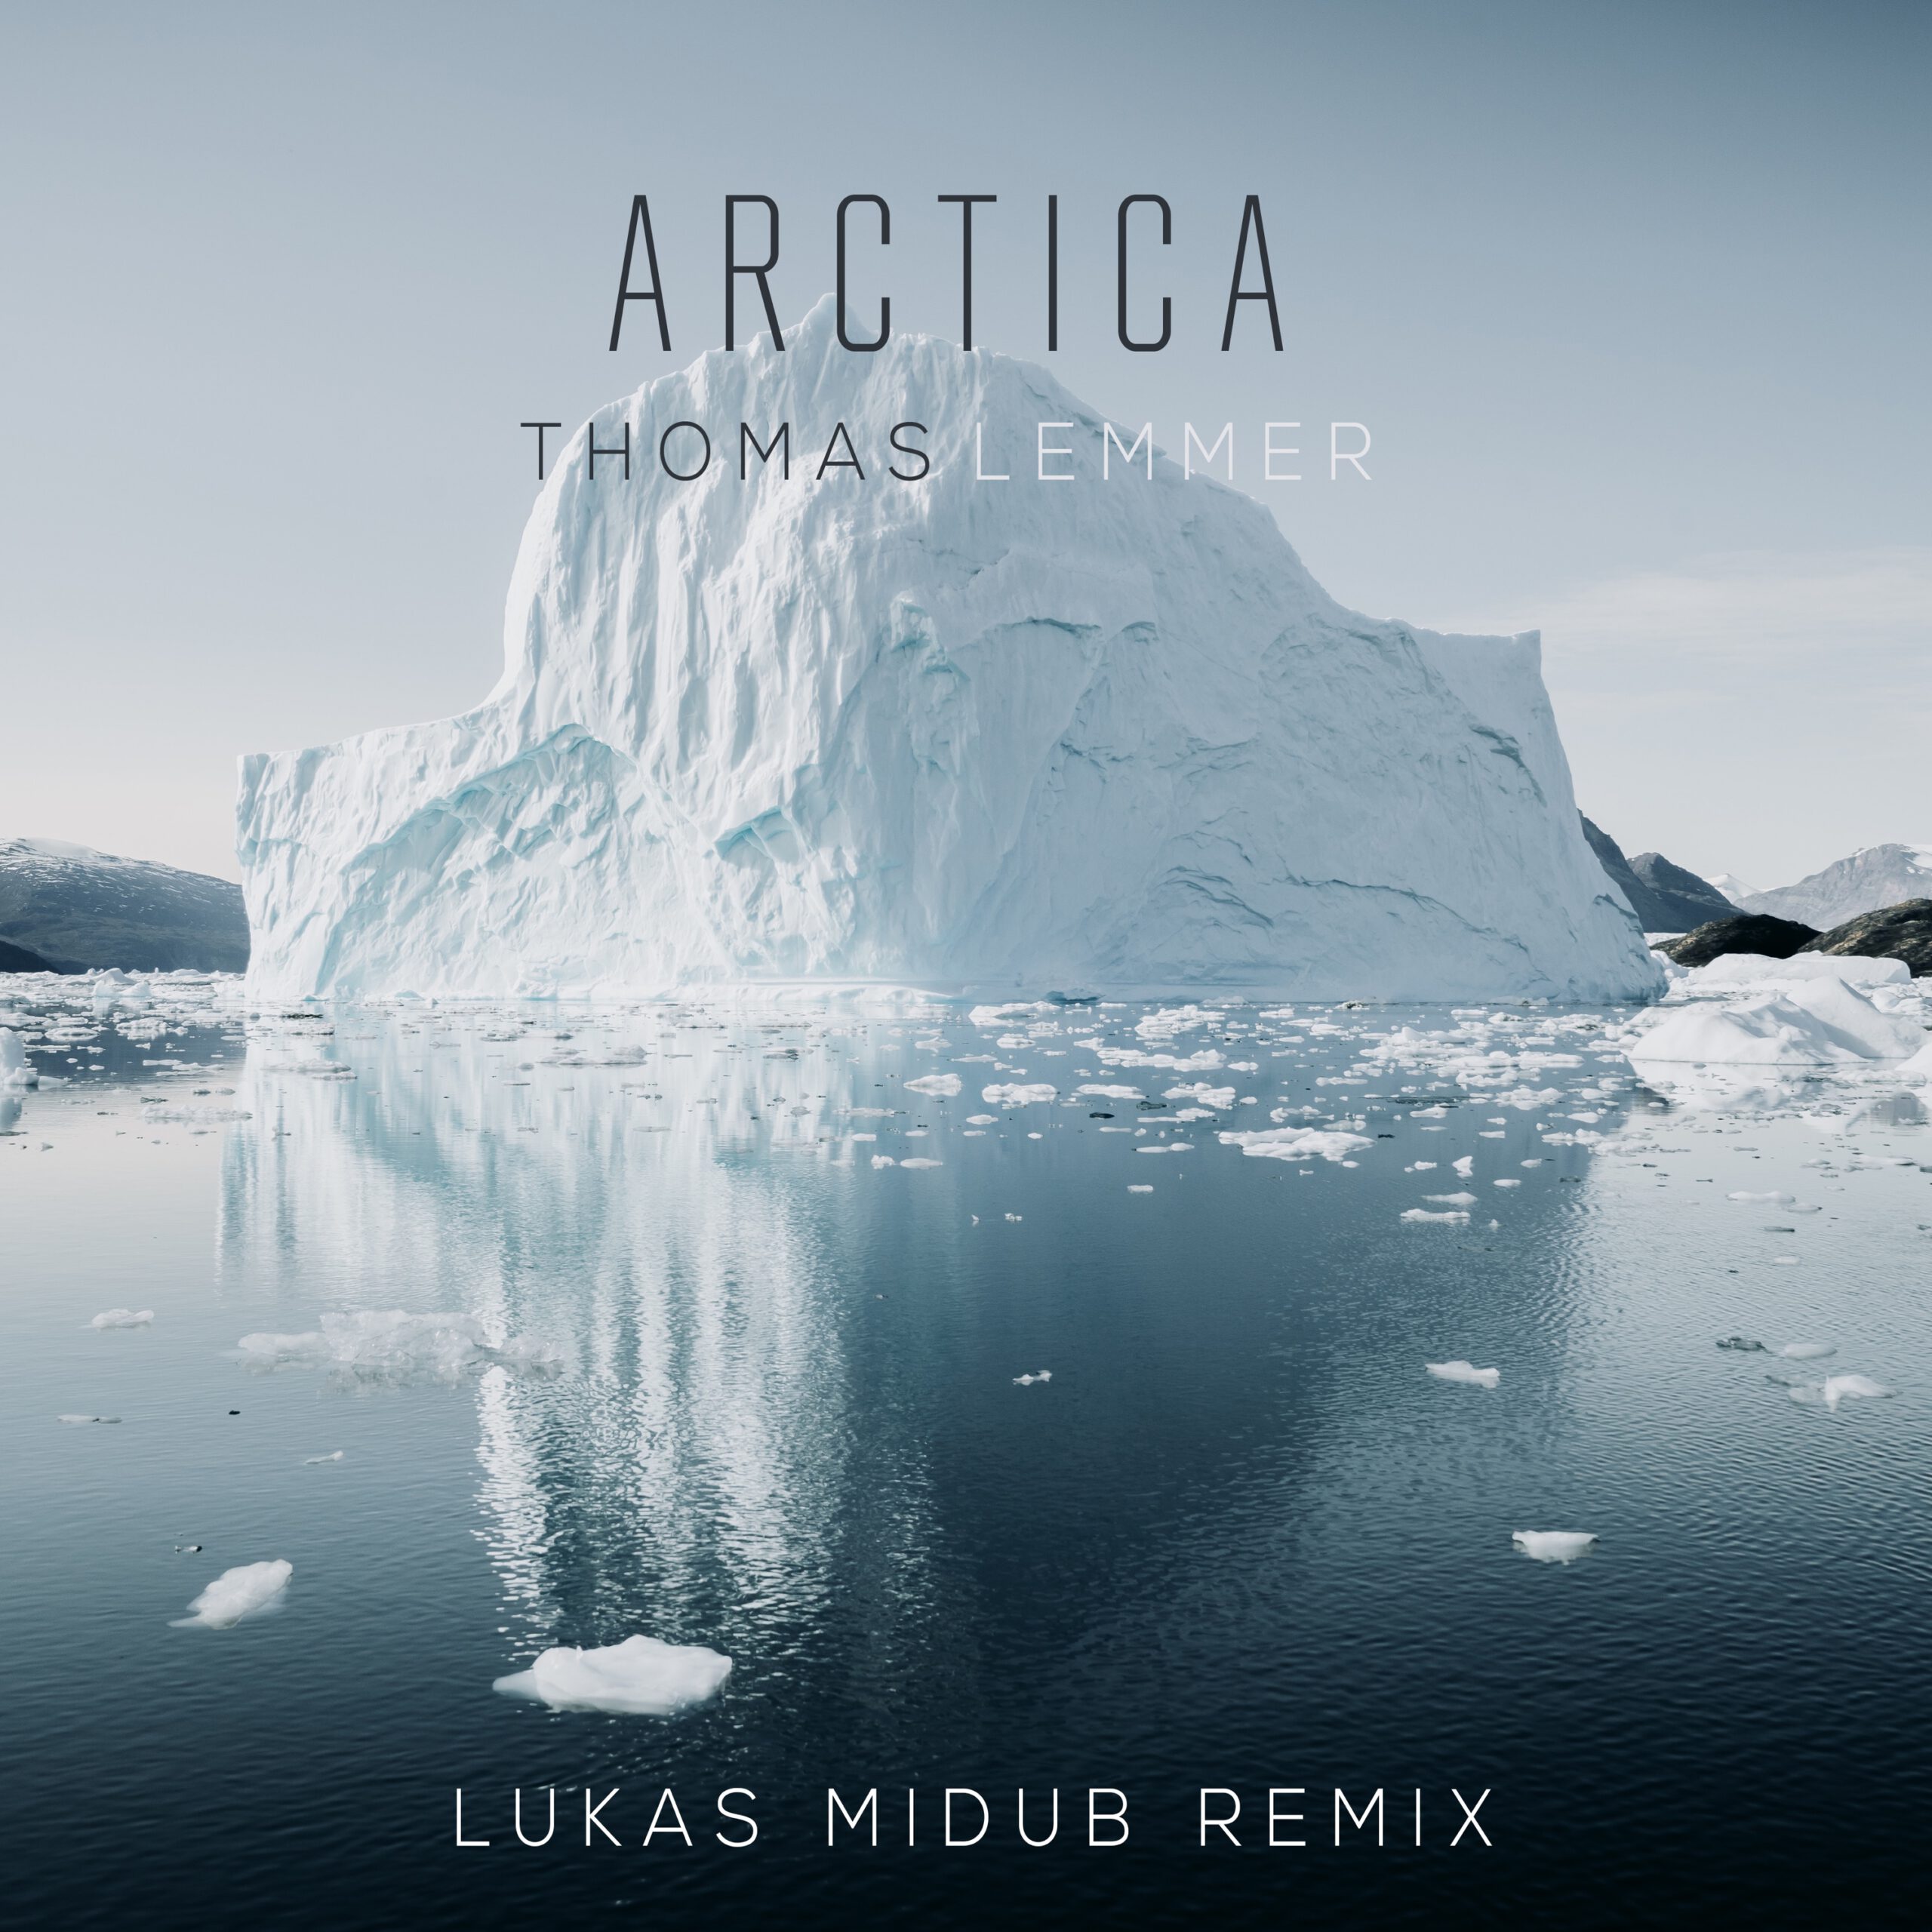 Thomas Lemmer - Arctica (Lukas Midub Remix)